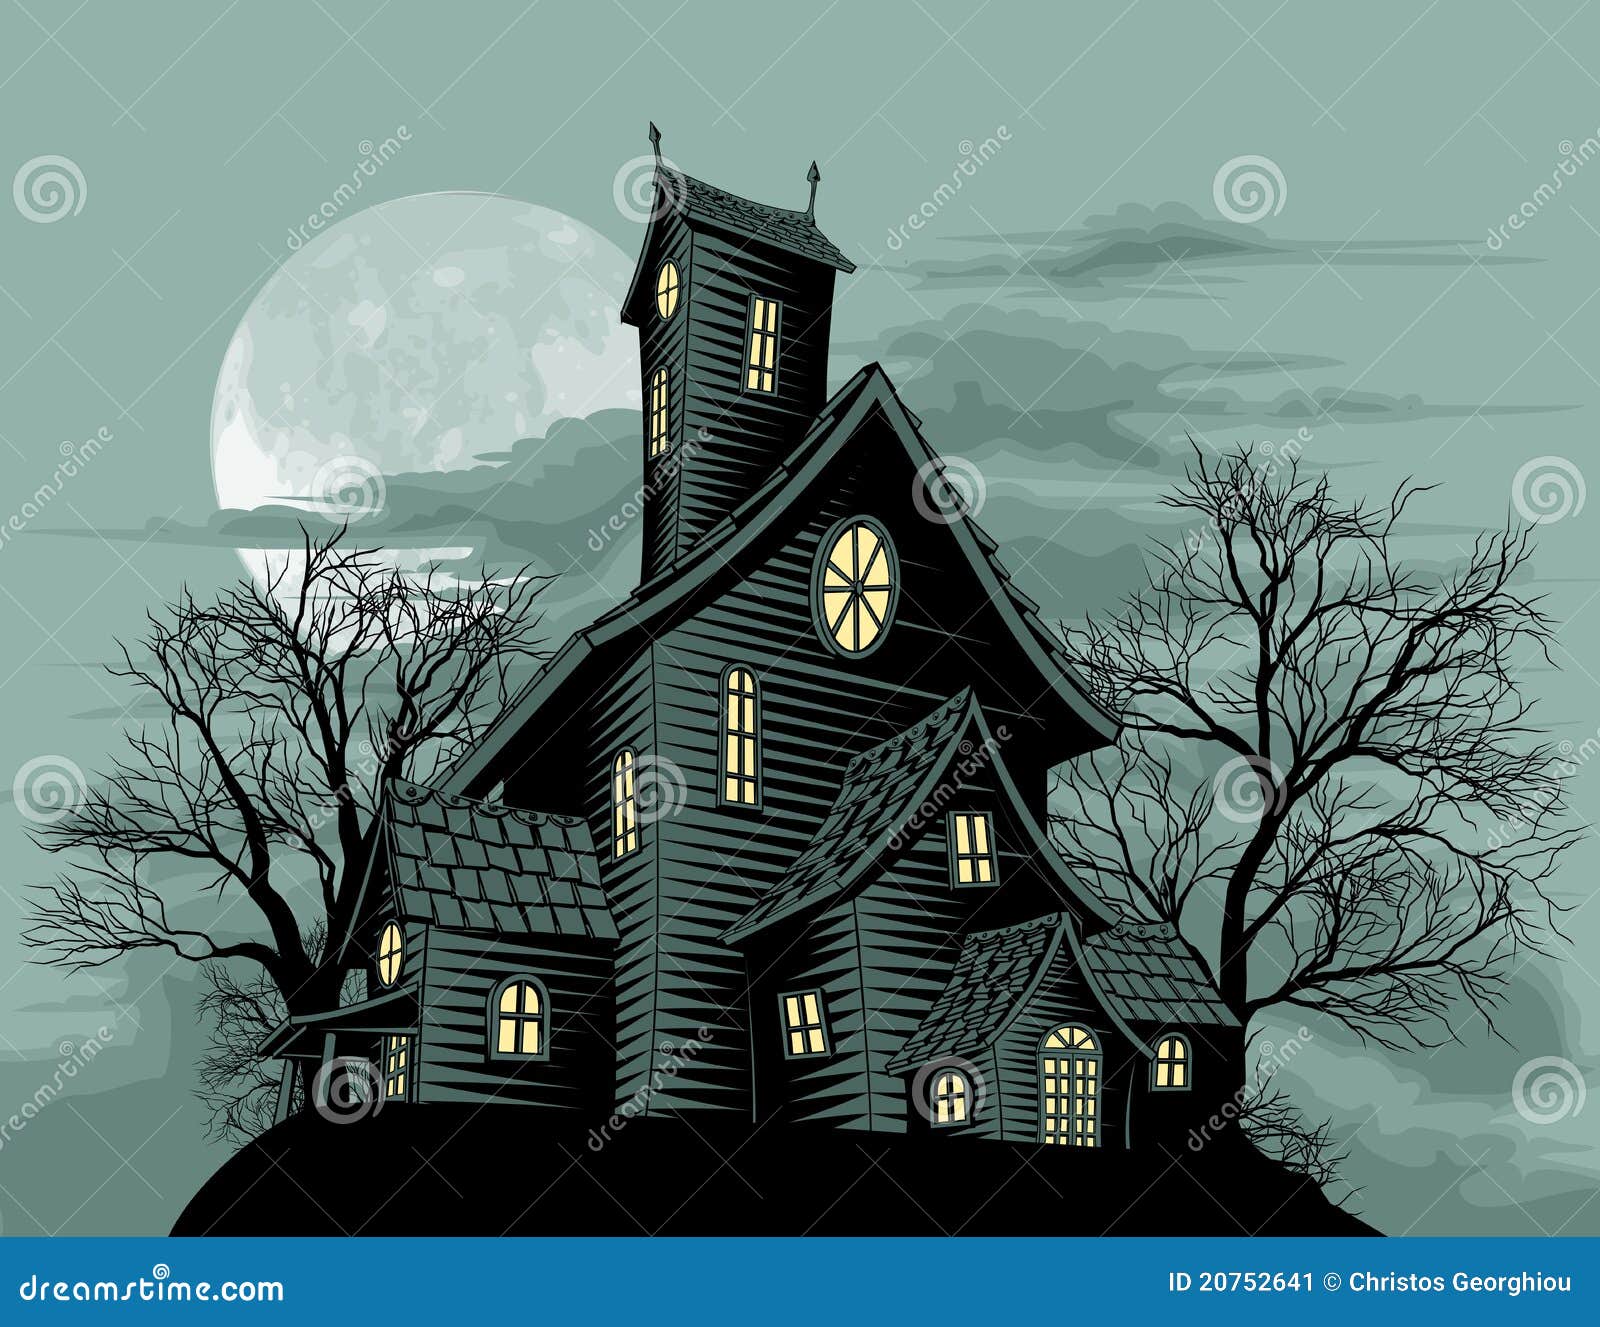 creepy haunted ghost house scene 